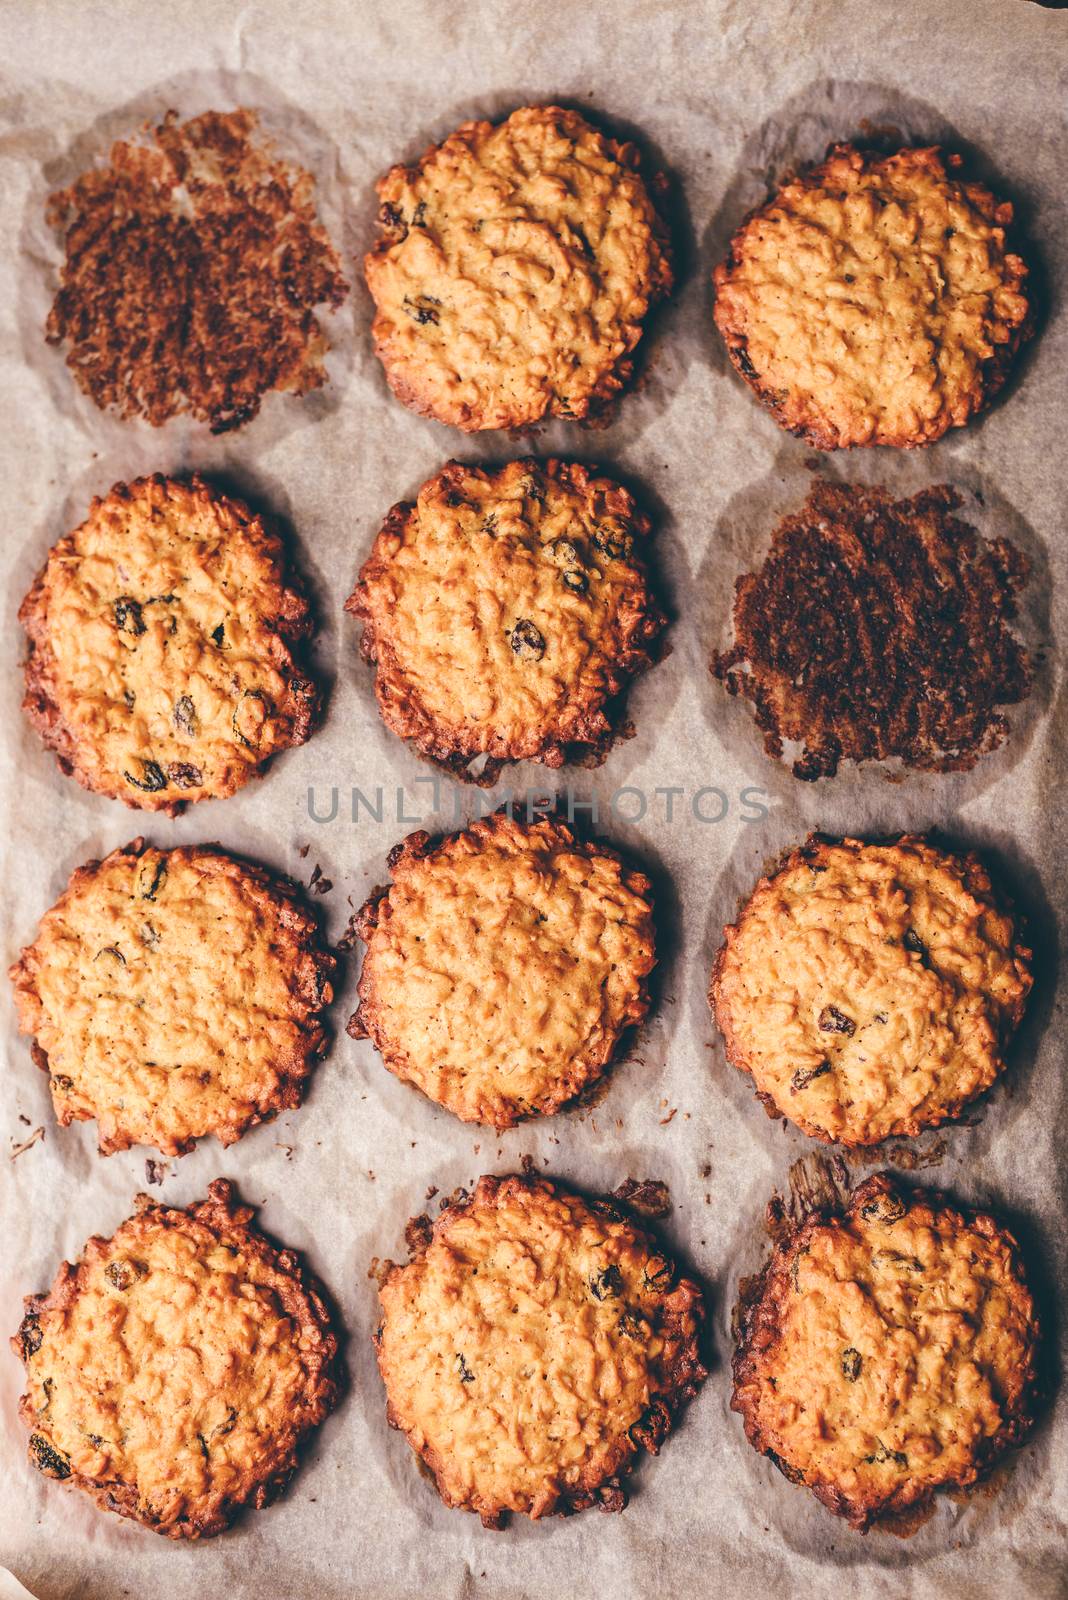 Oatmeal Cookies with Raisins by Seva_blsv